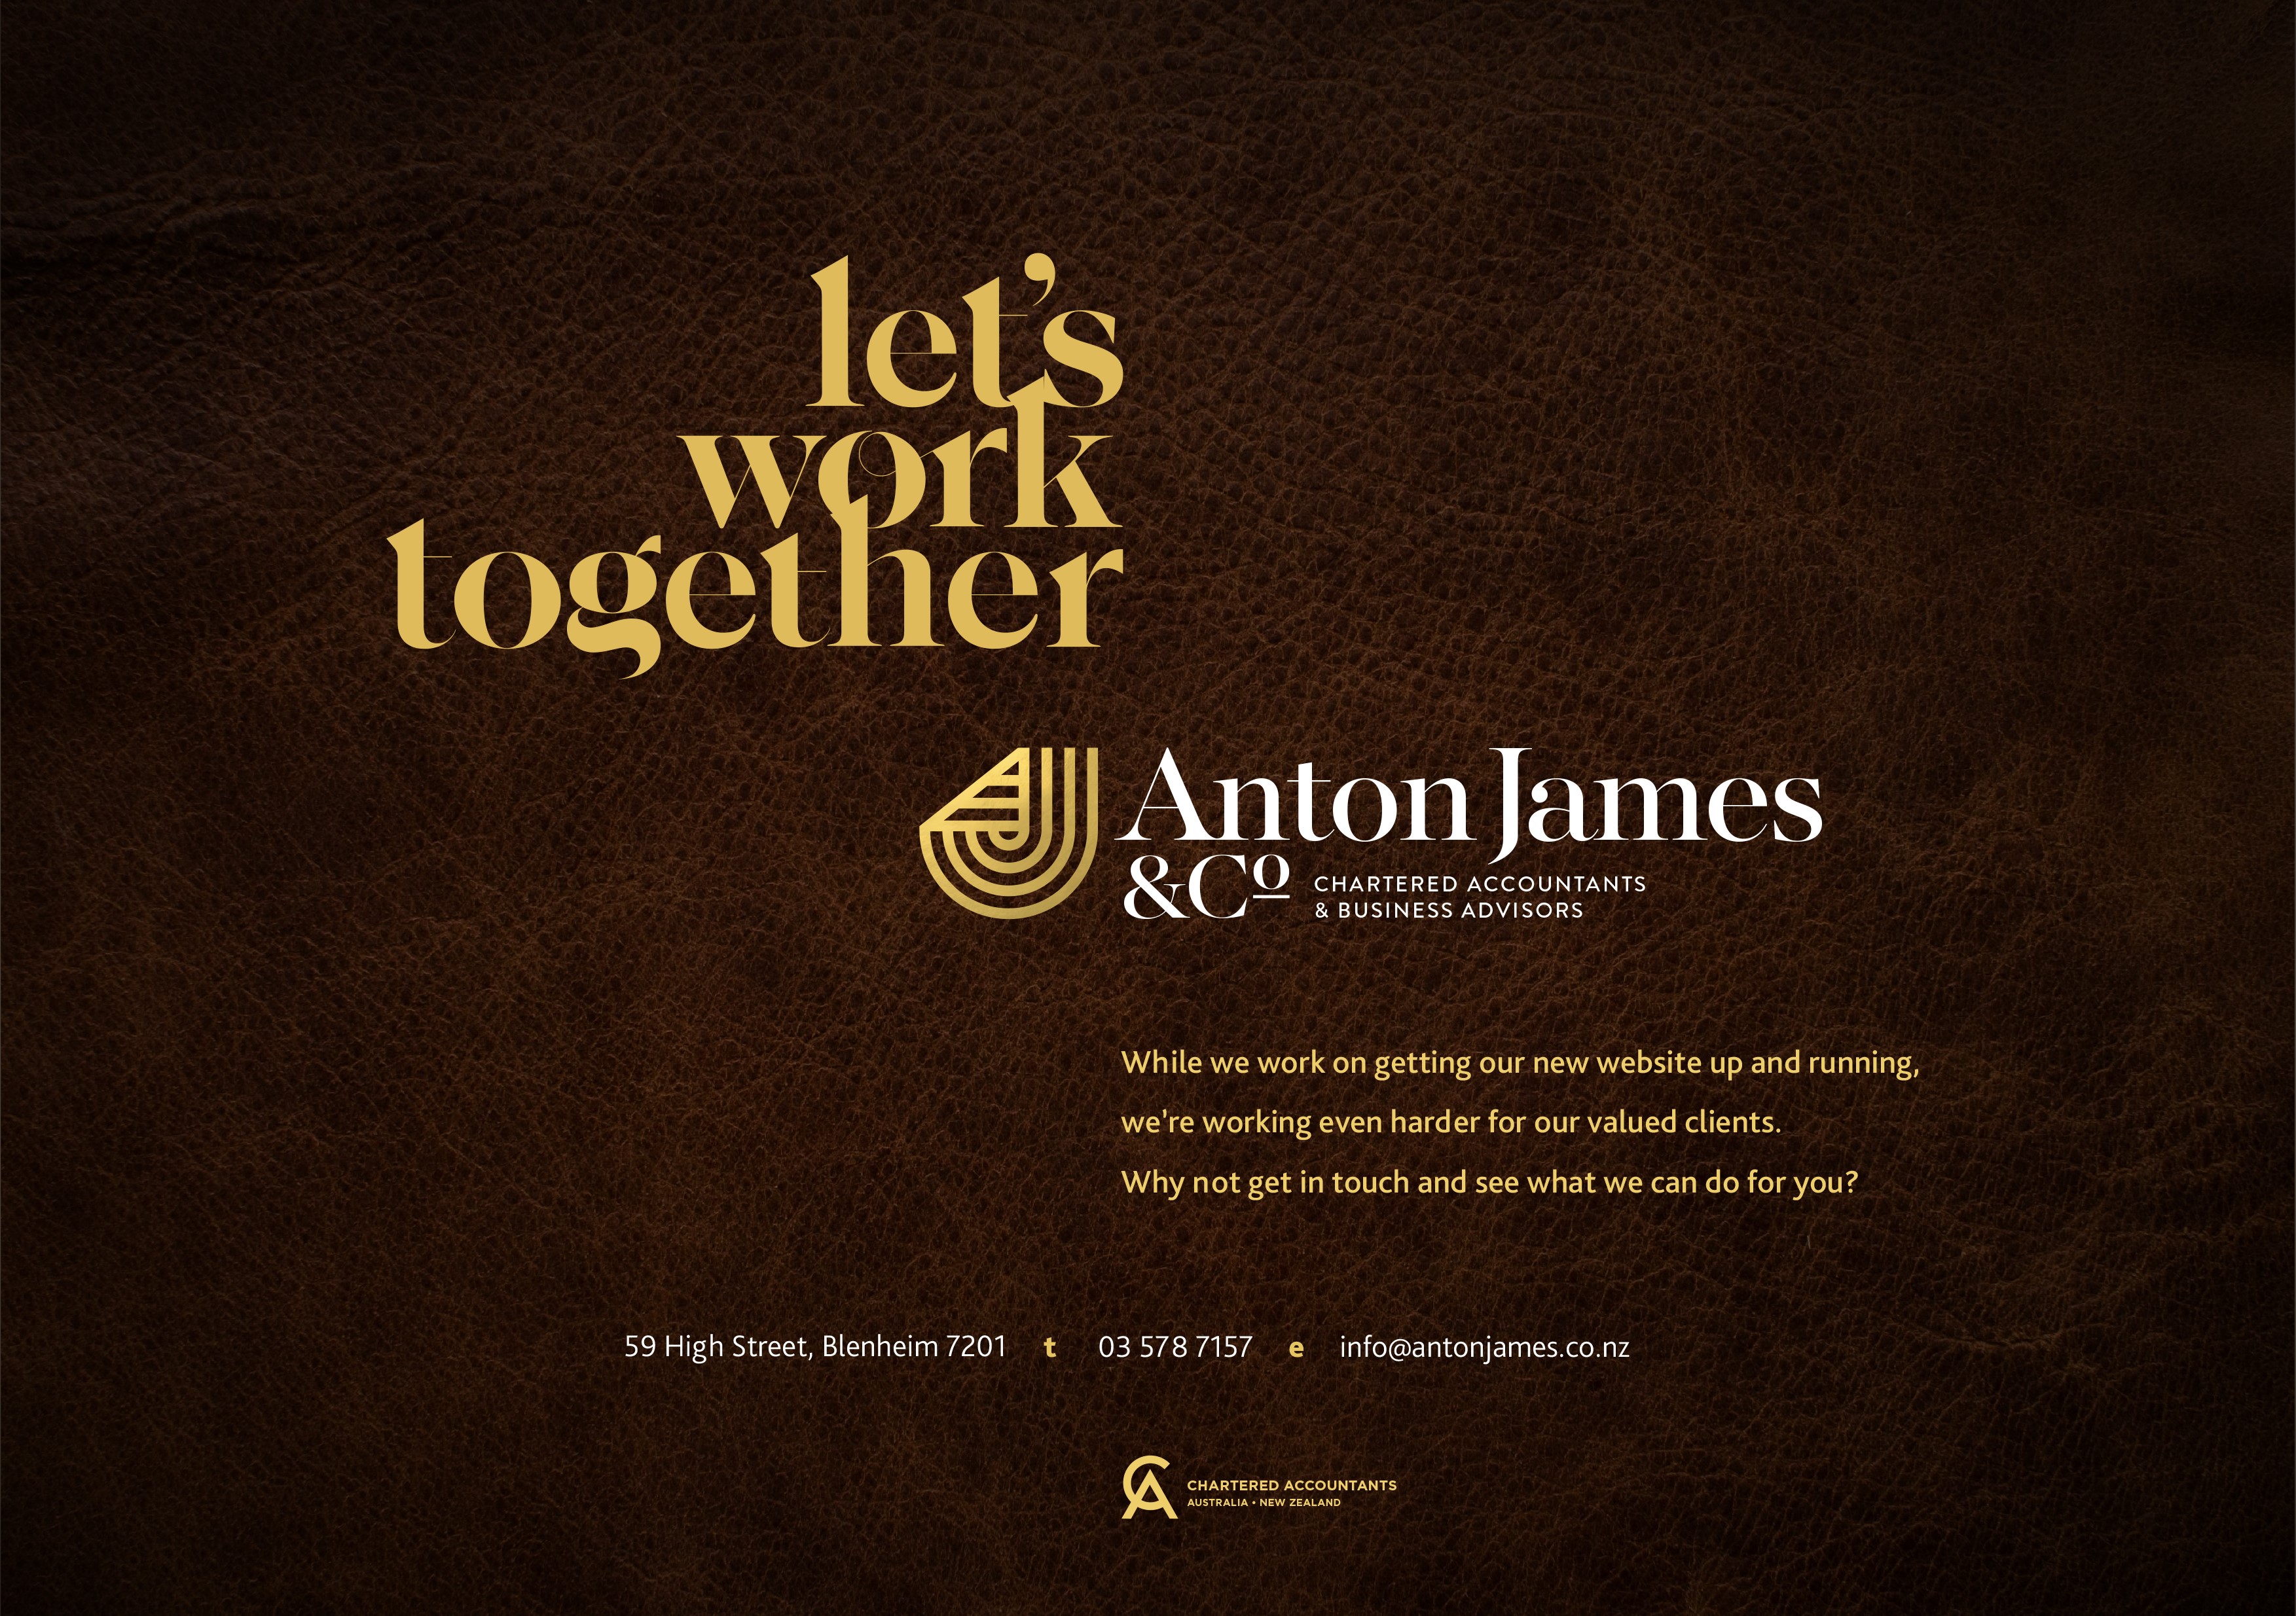 Anton James & Co. Chartered Accountants and Business Advisors